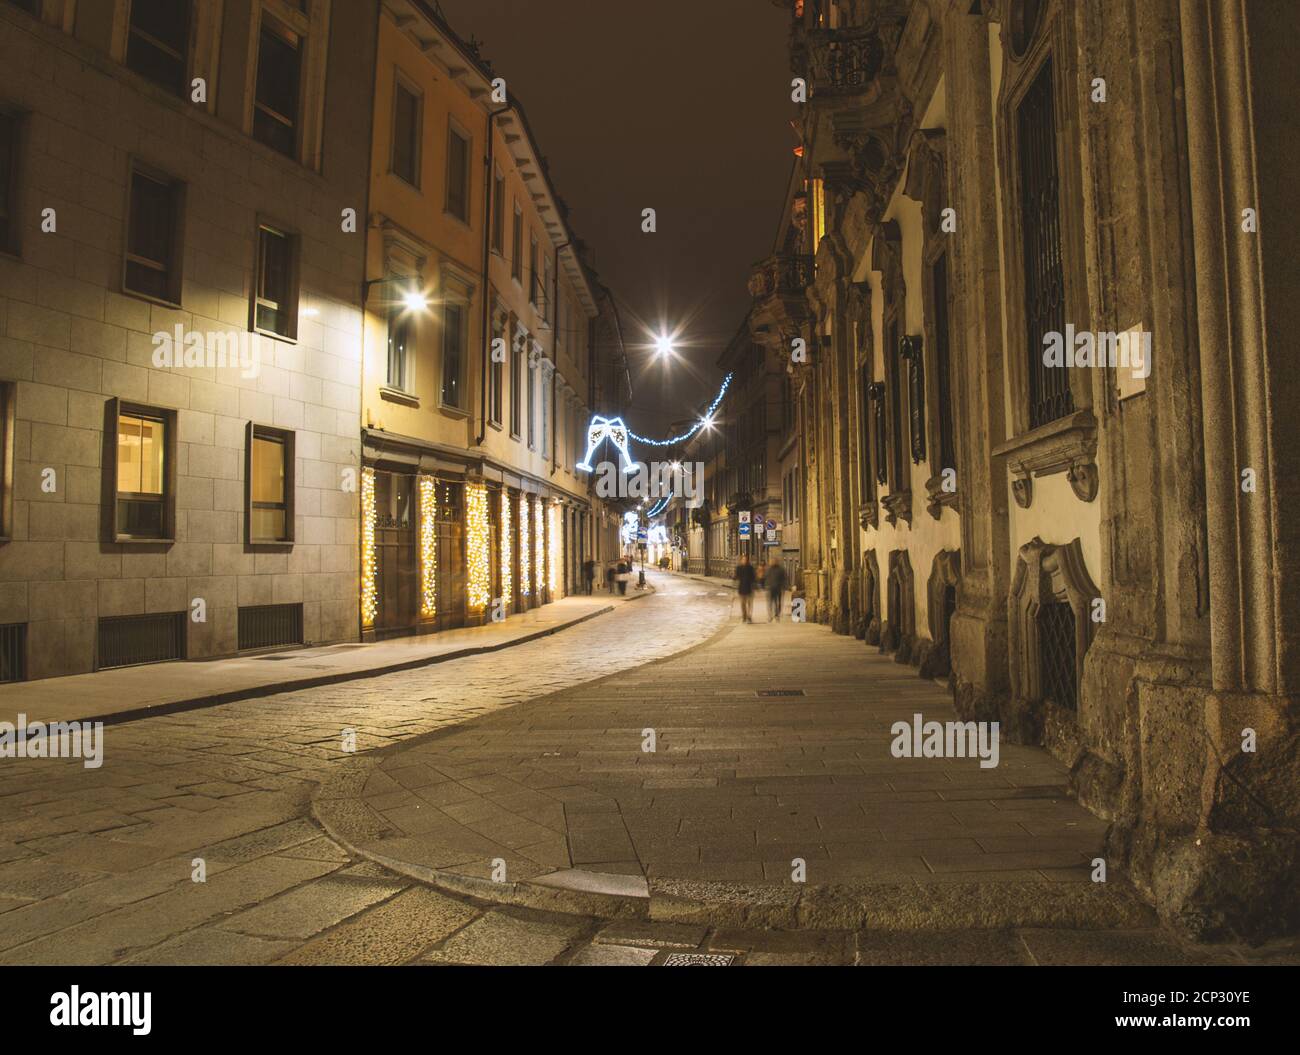 Deserted street with Xmas lights. Christmas city decorations. Festive illumination in Milan center.Italy Stock Photo